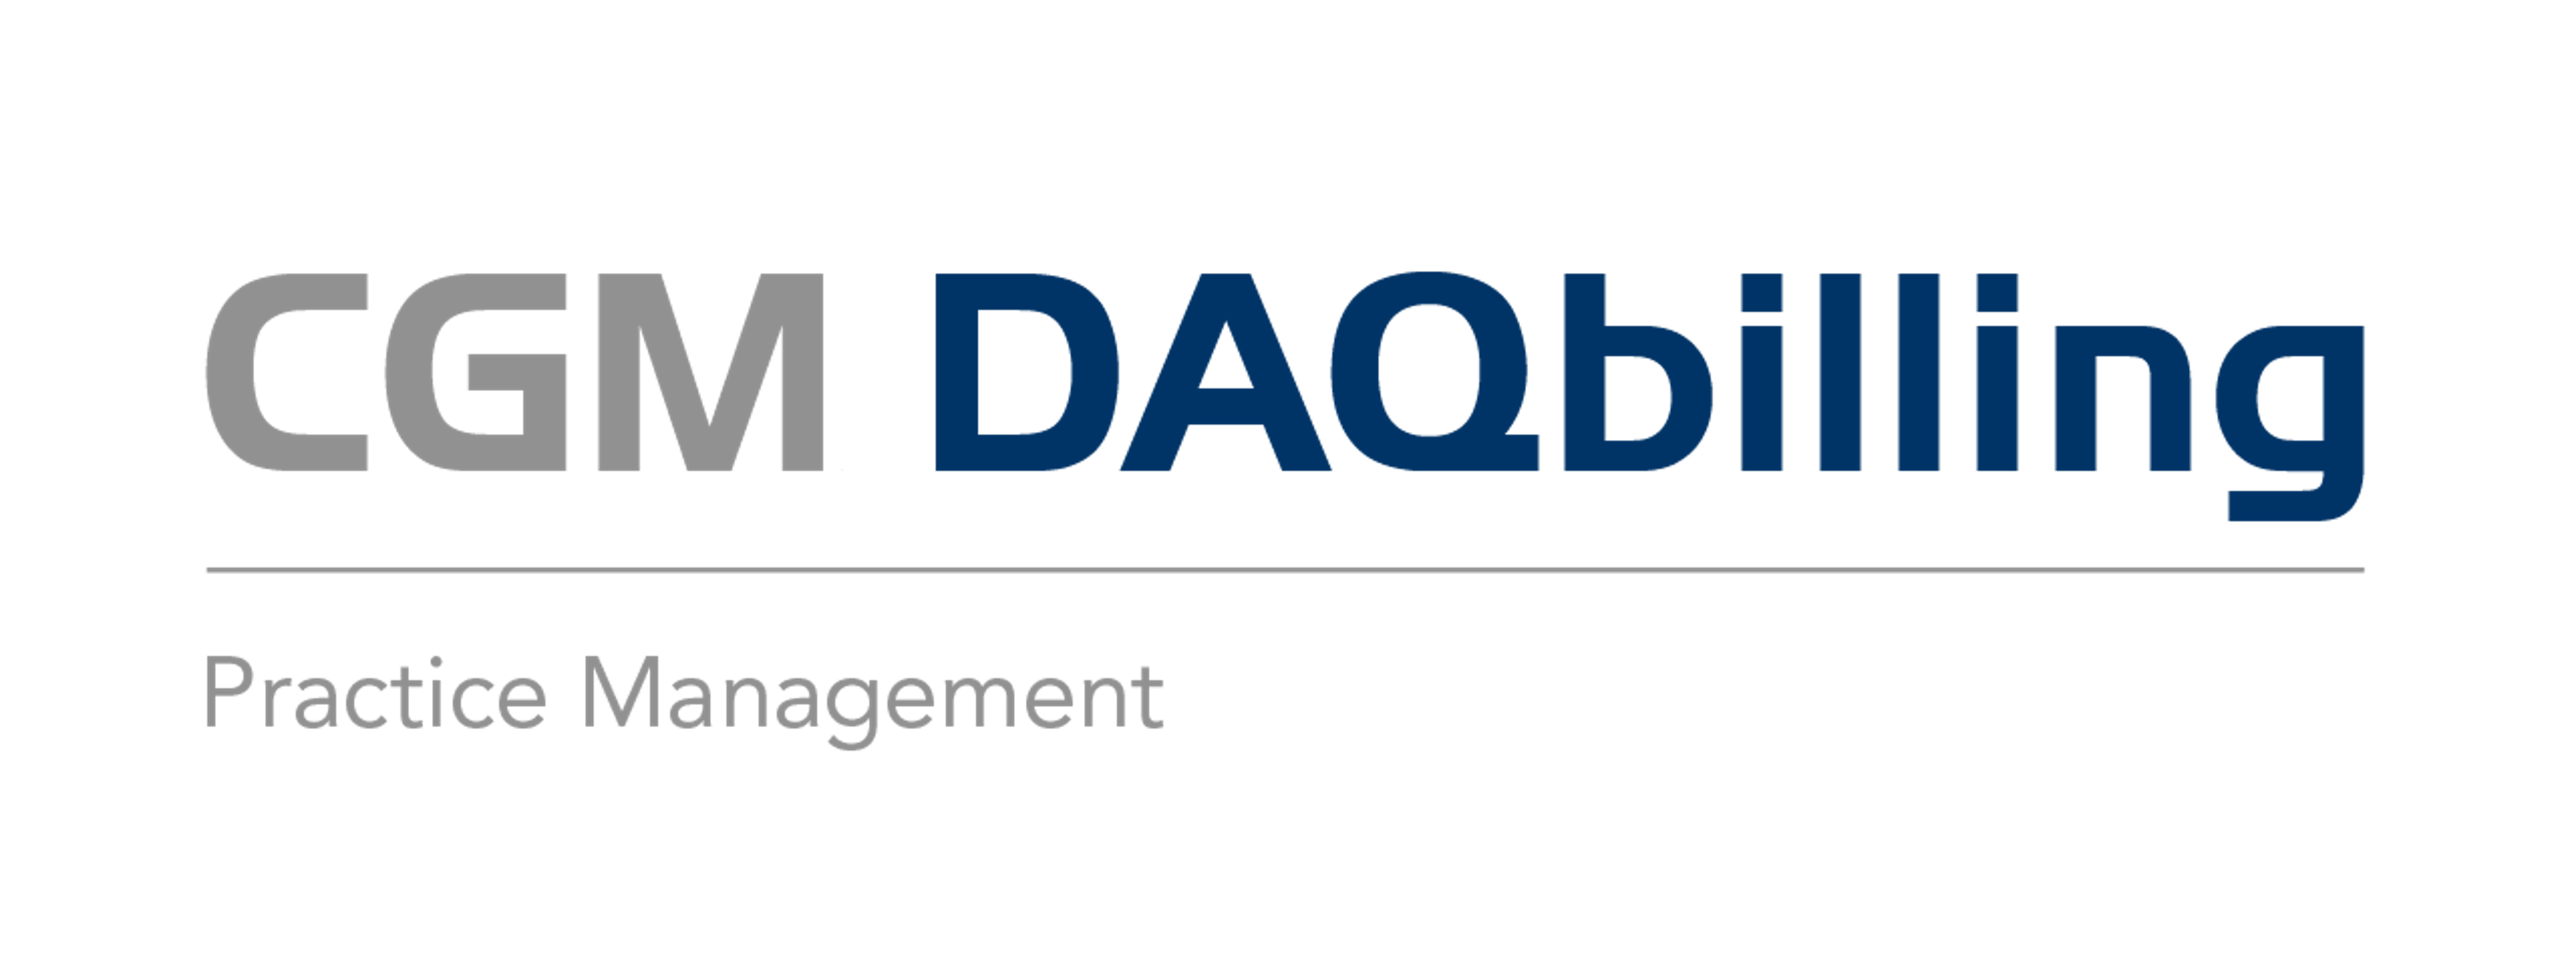 CGM DAQbilling Logo